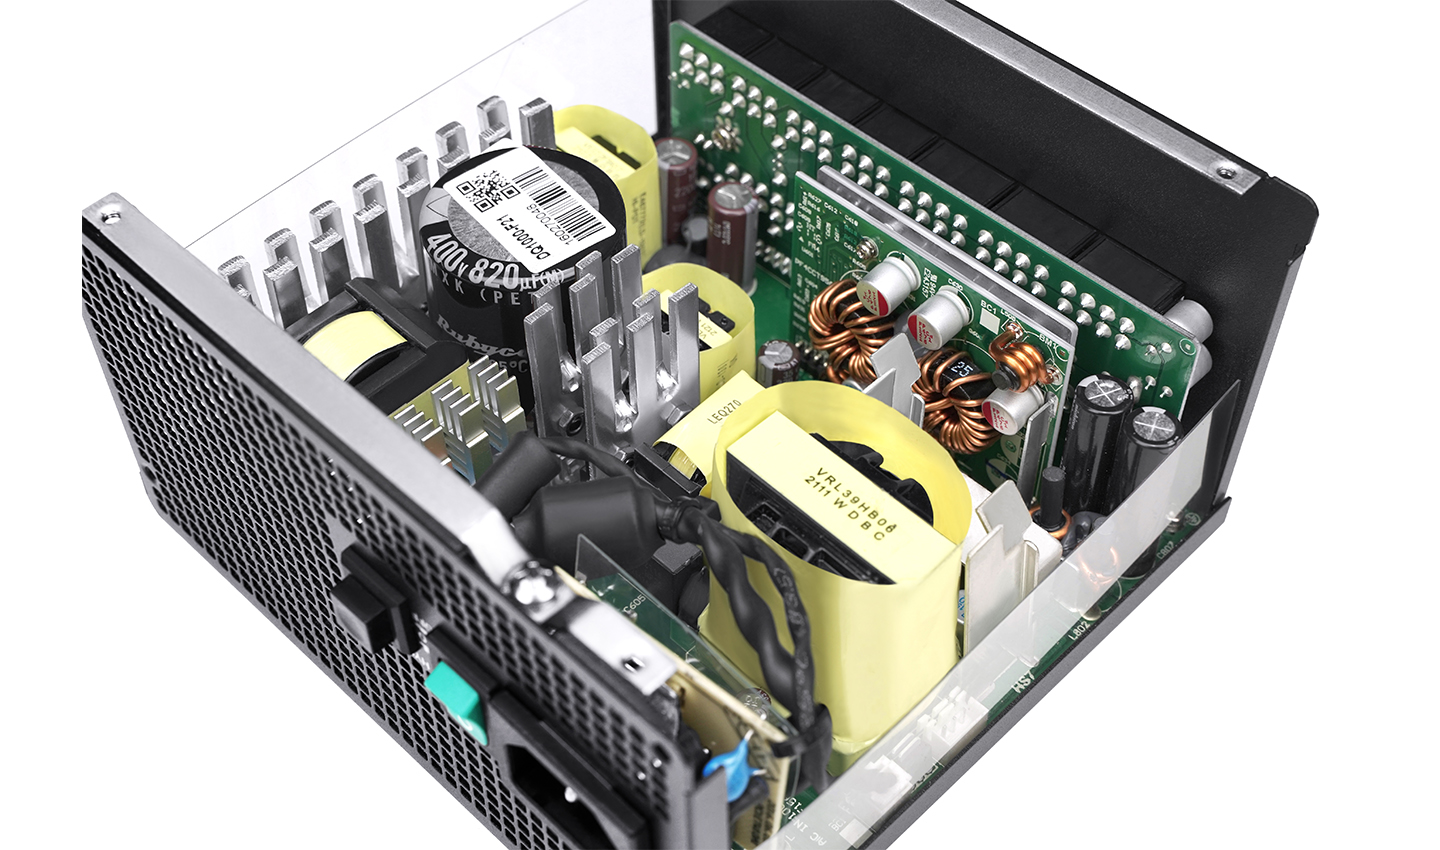 Блок питания Deepcool PQ850M (ATX 2.4, 850W, Full Cable Management, PWM 120mm fan, Active PFC, 80+ GOLD) RET